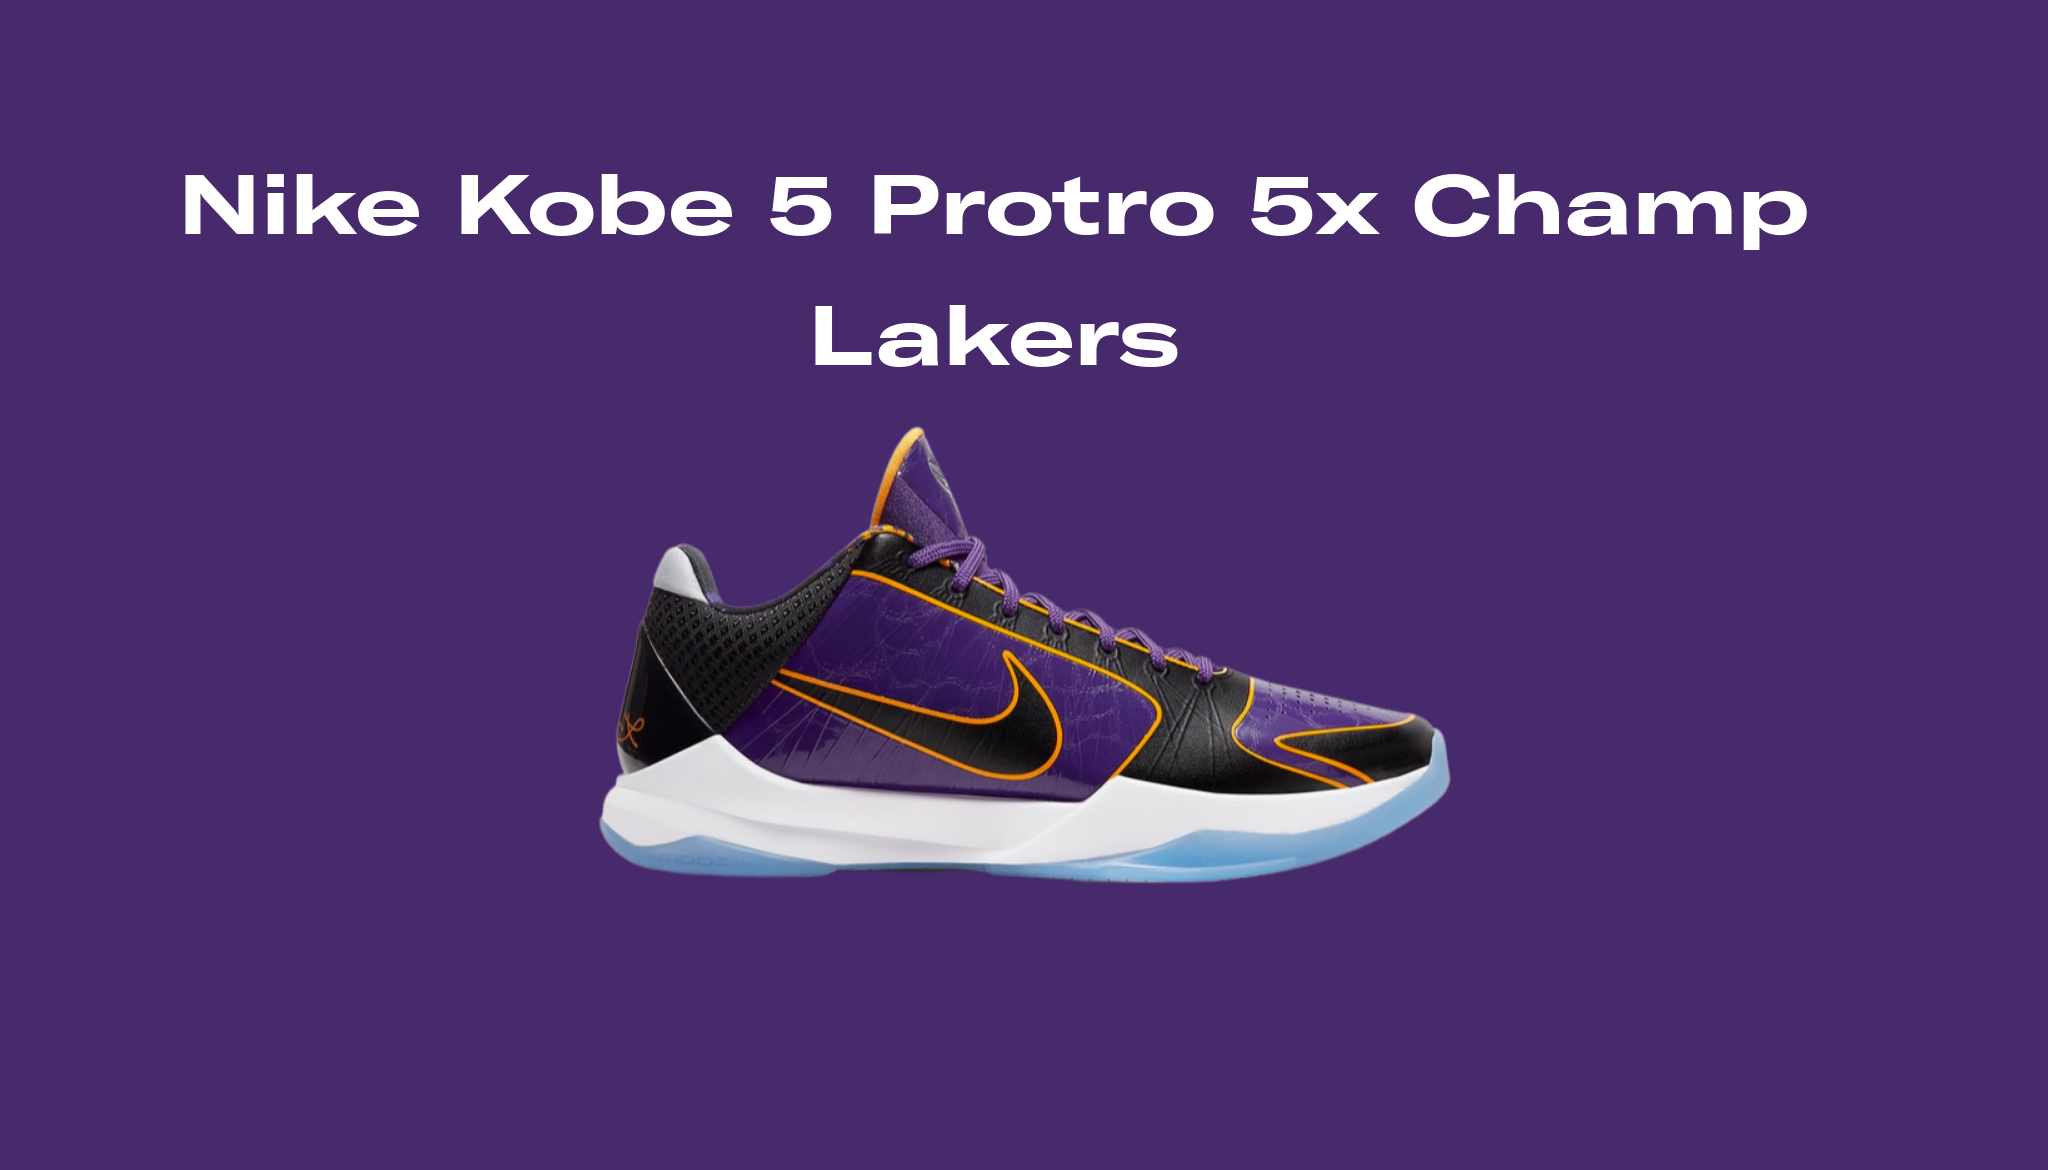 Nike Kobe 5 Protro 5x Champ Lakers, Raffles and Release Date